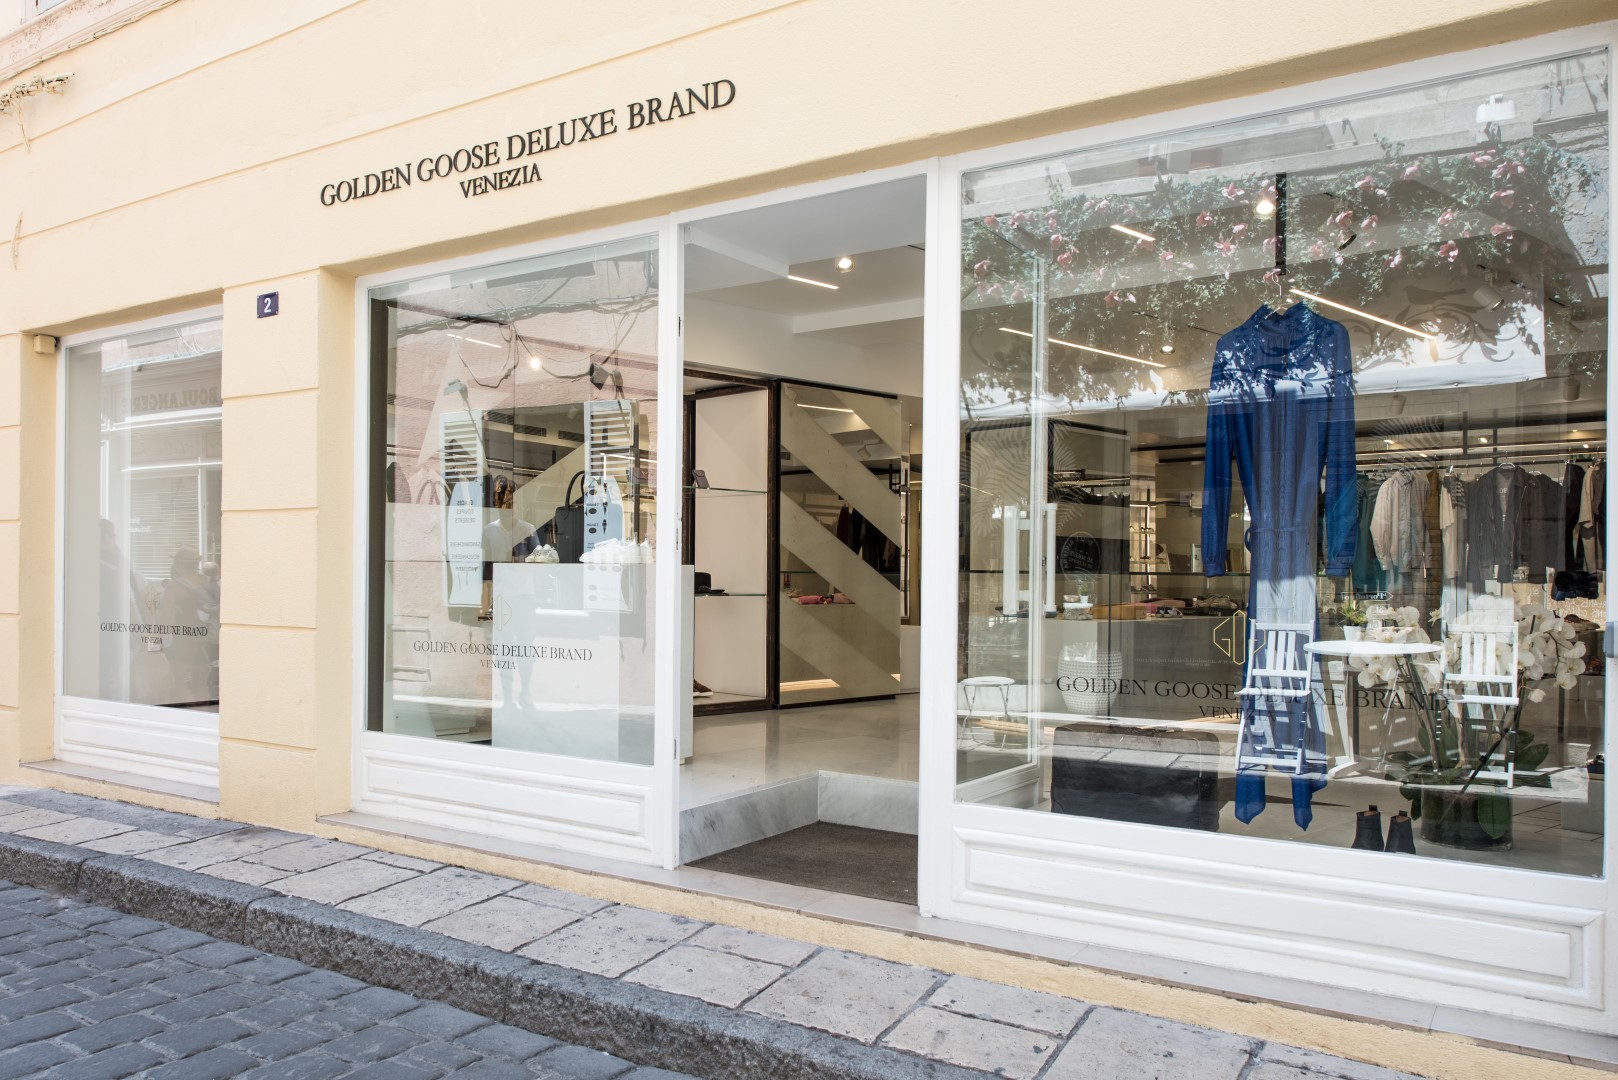 Golden Goose Deluxe Brand Francia: aperta la nuova boutique a Saint Tropez